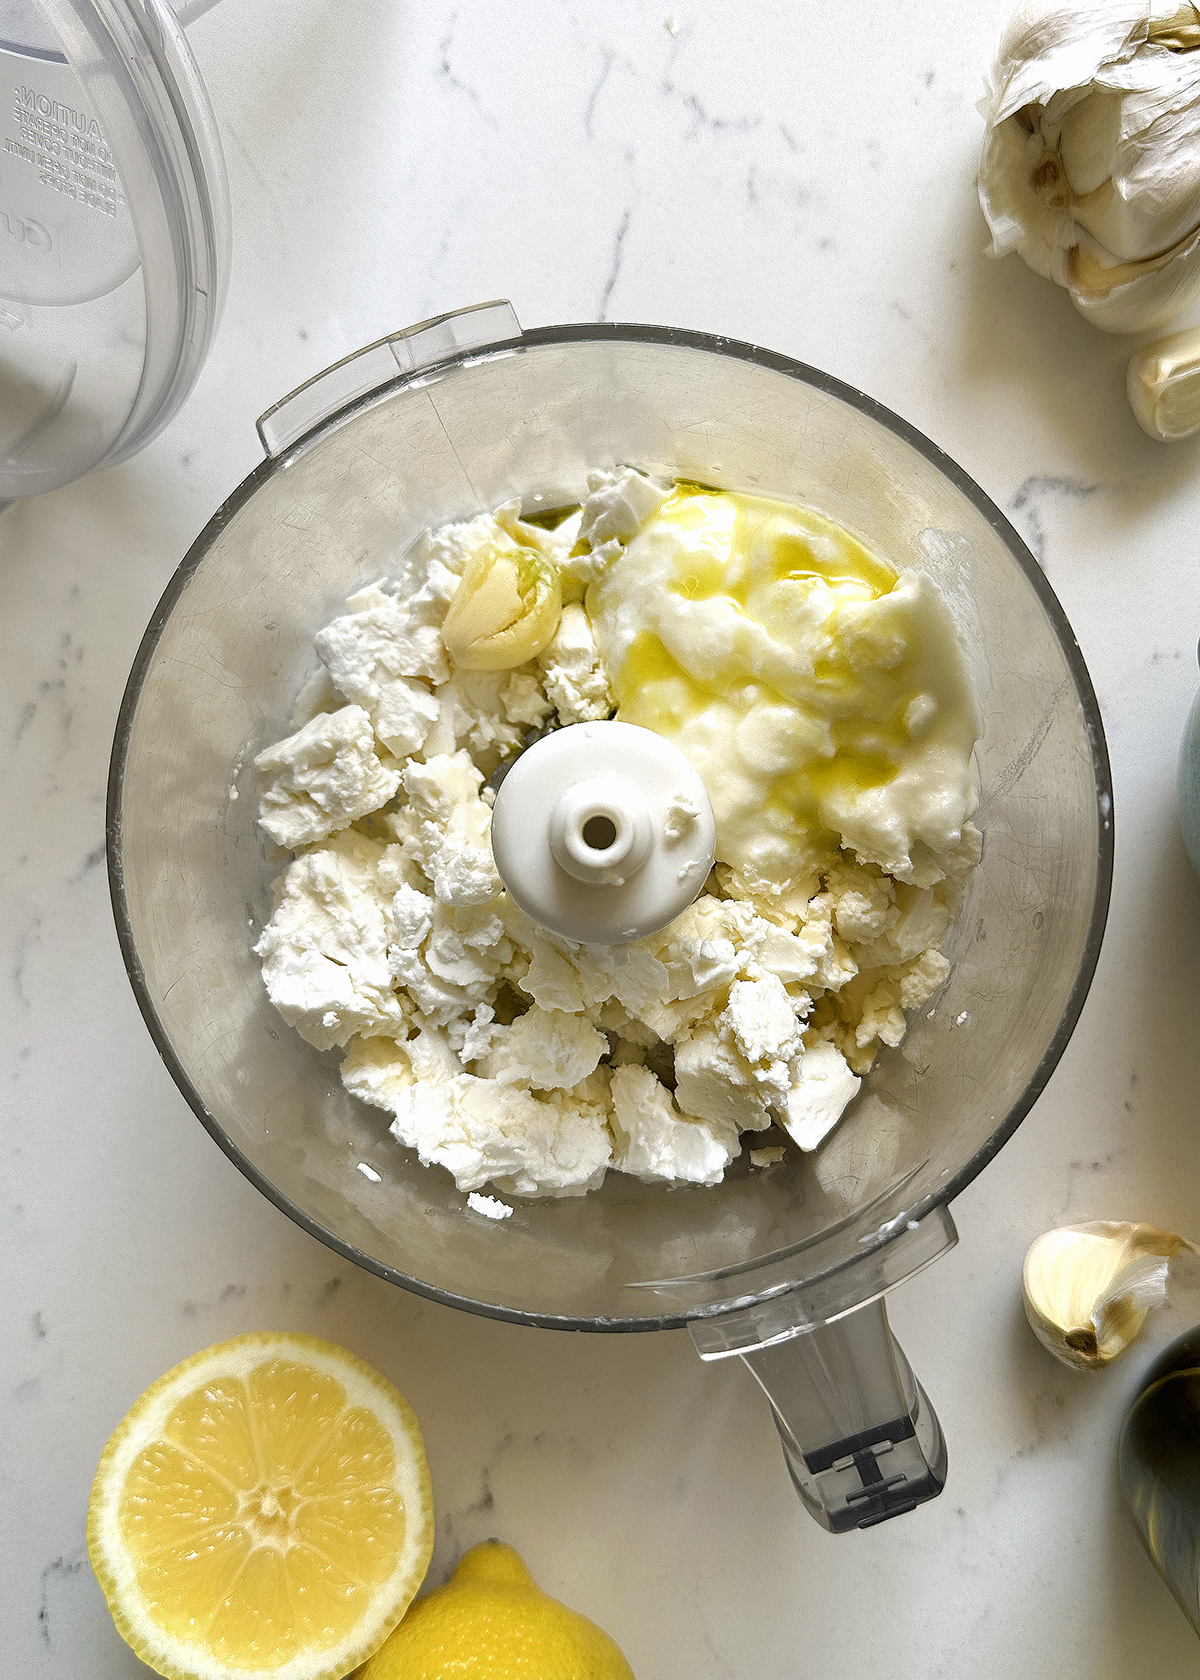 feta yogurt garlic lemon juice olive oil in food processor